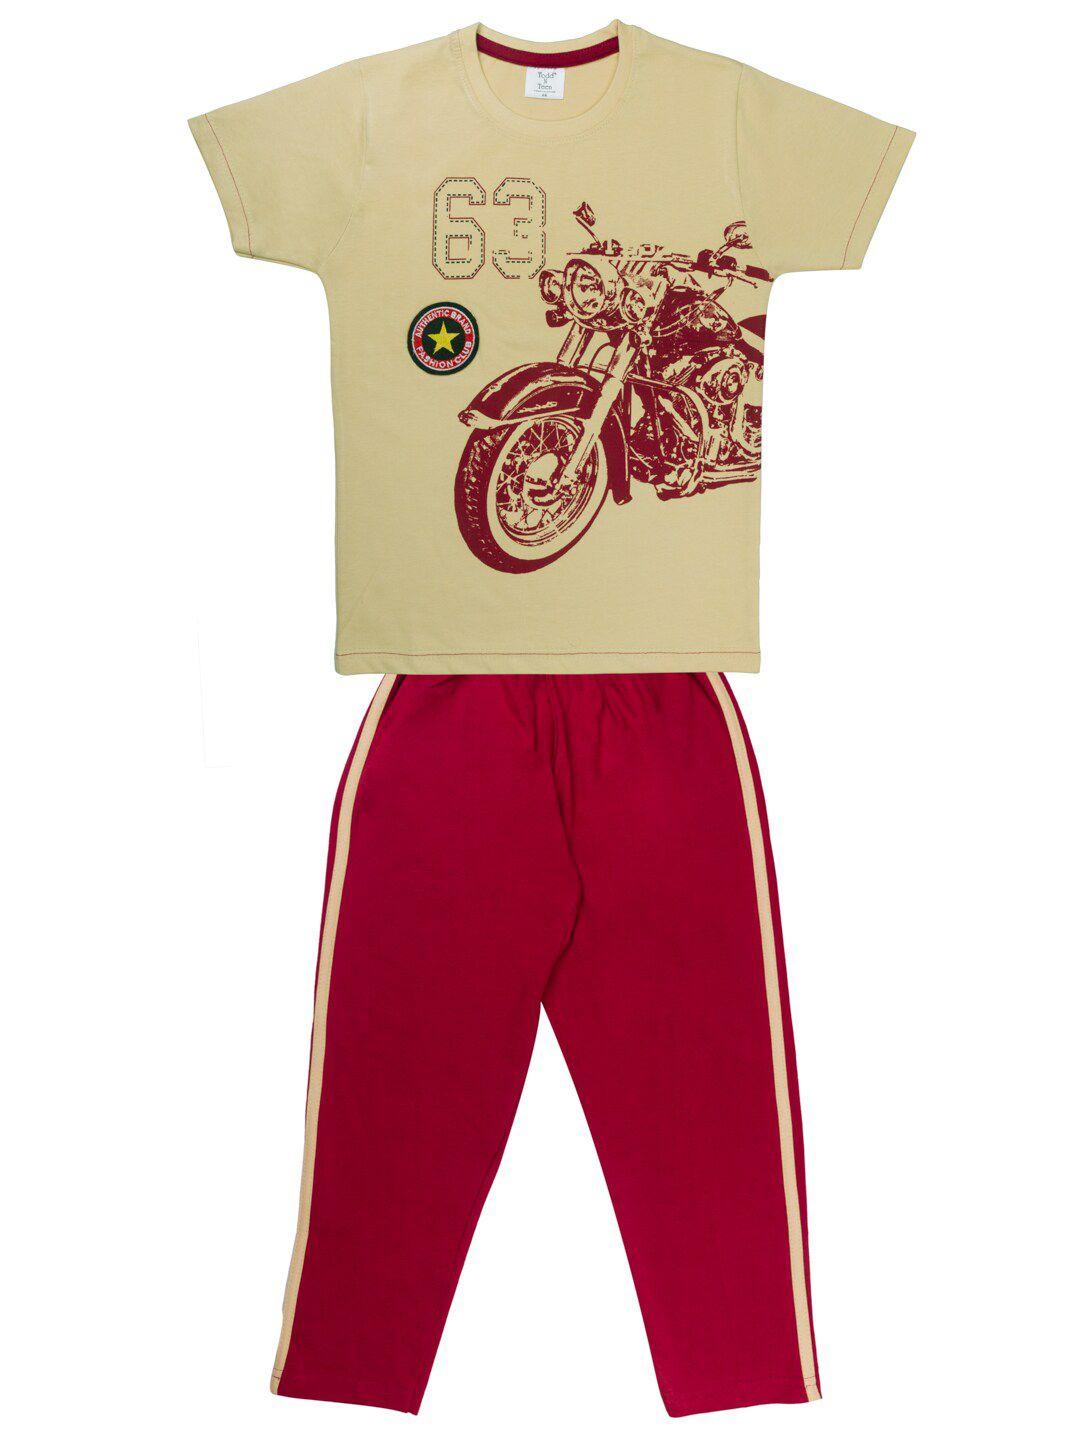 todd n teen boys beige & maroon printed t-shirt with pyjamas